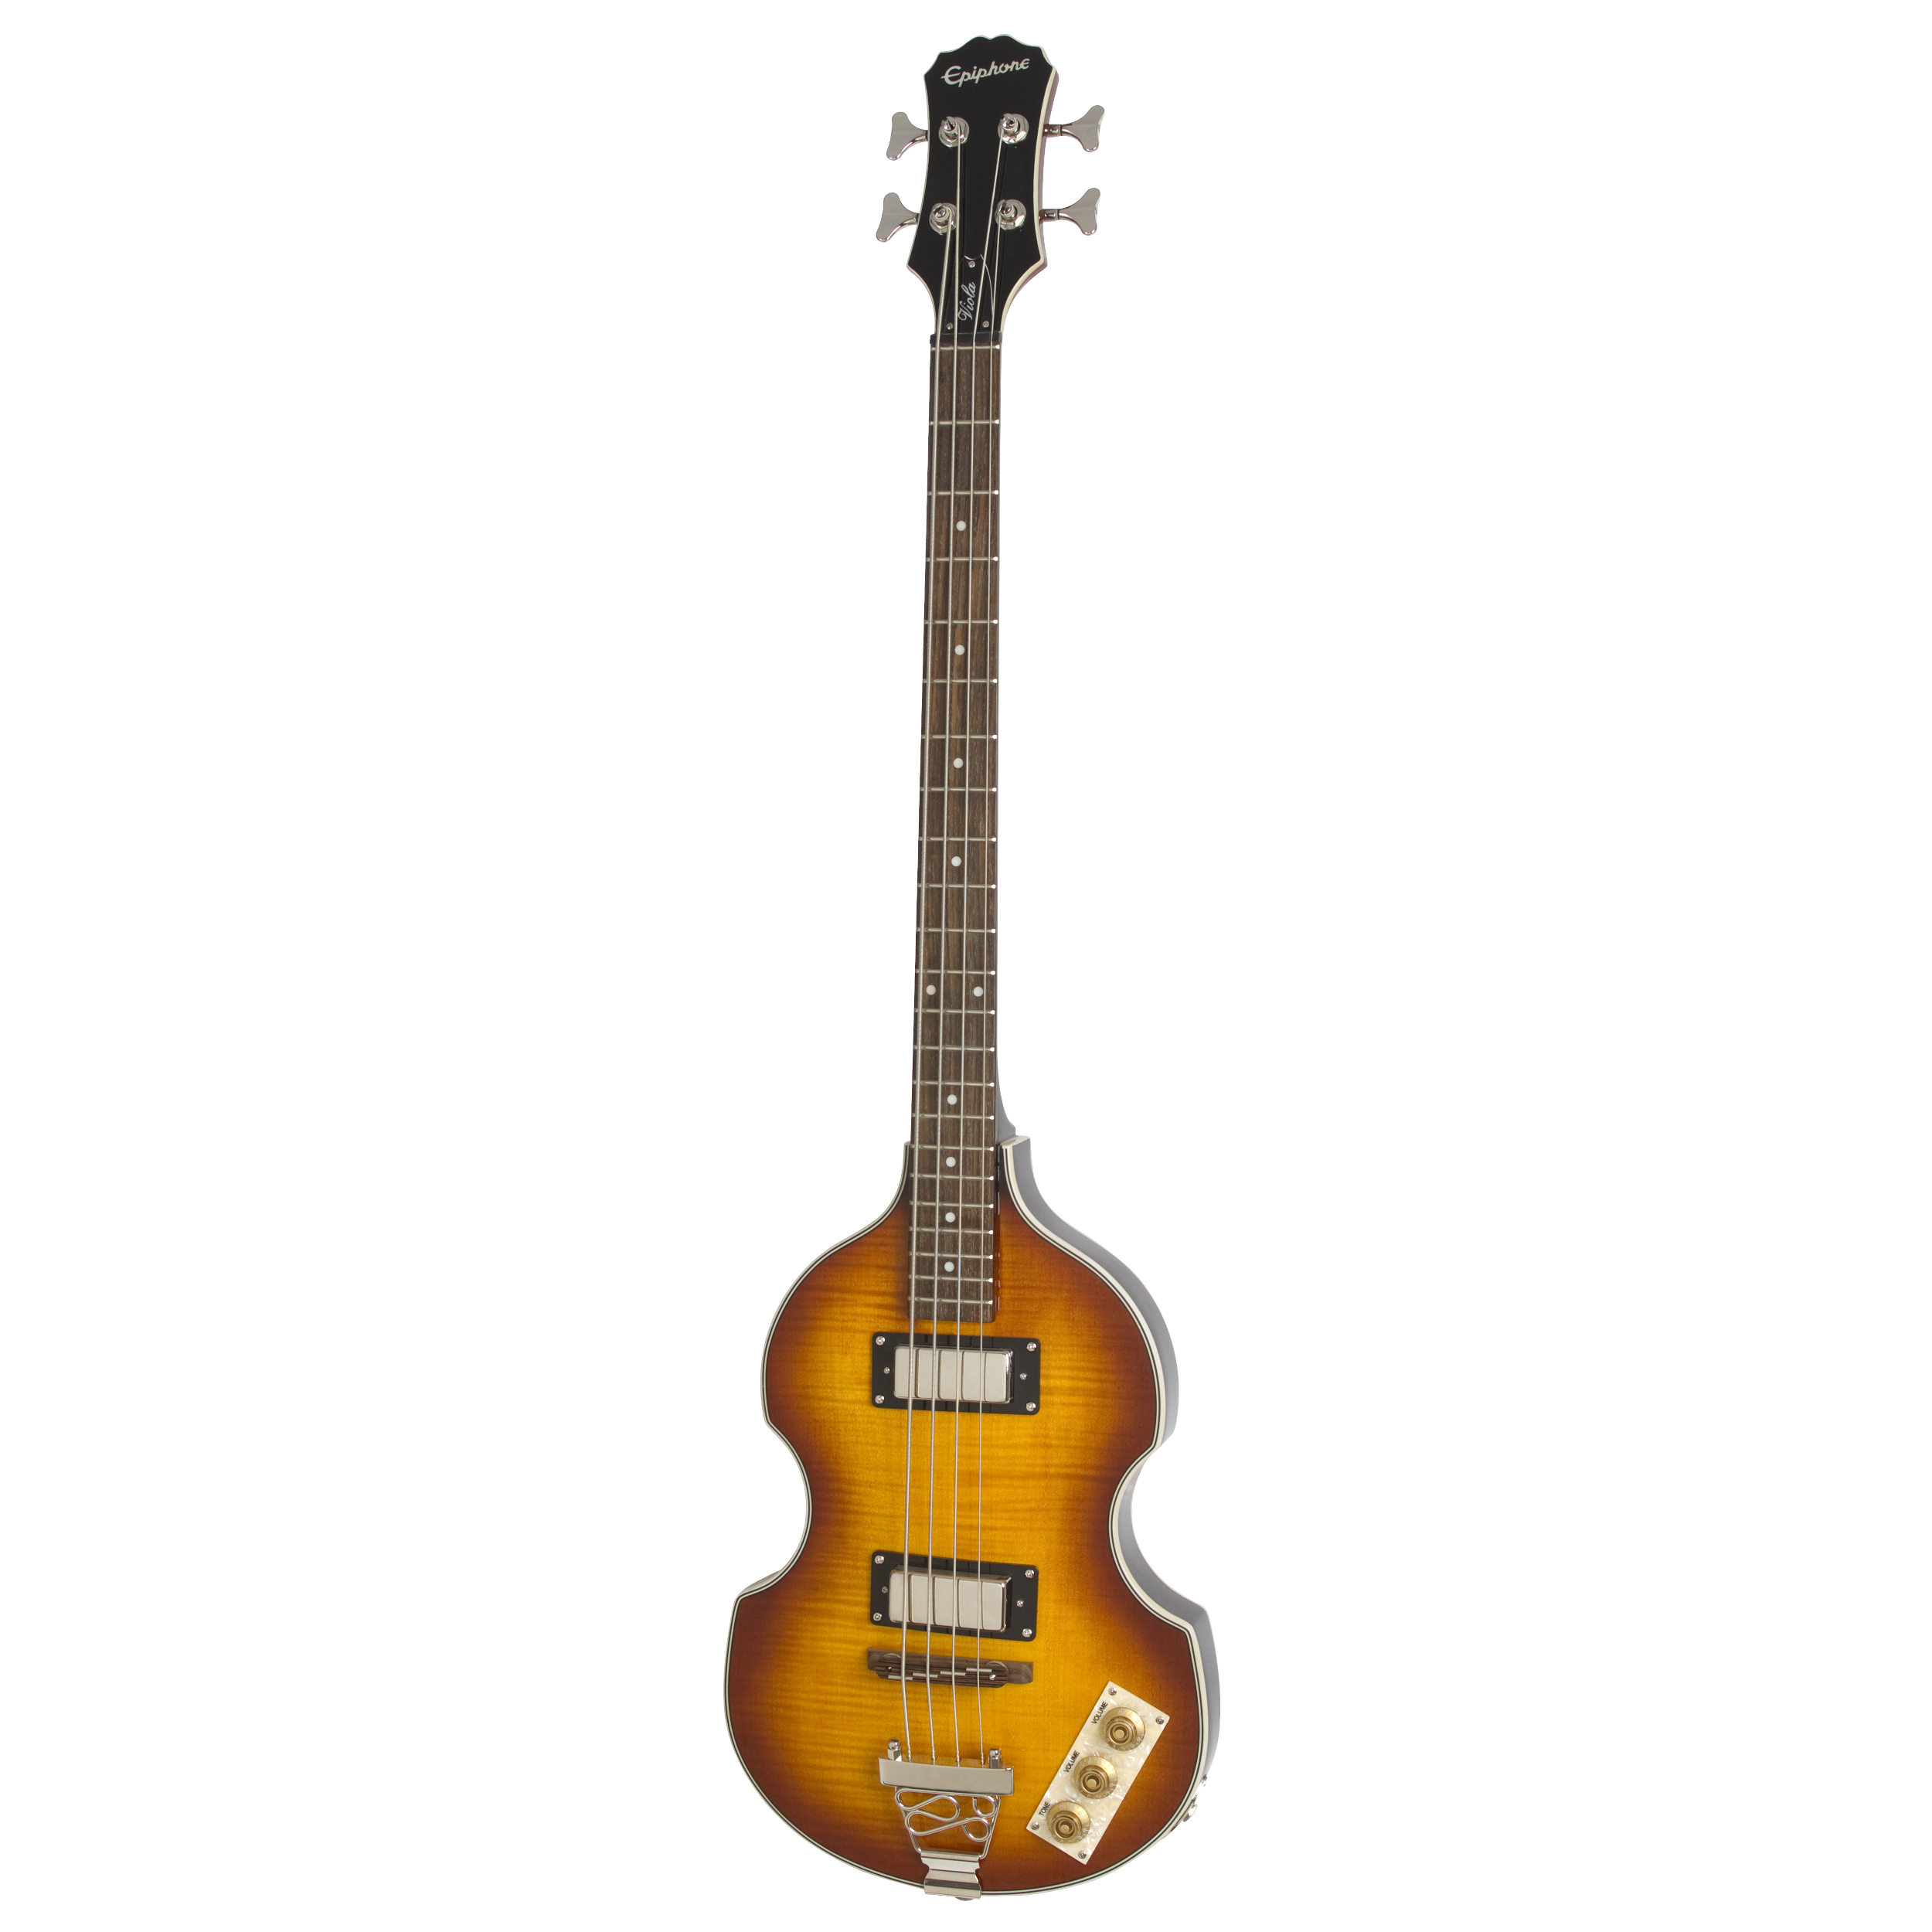 Epiphone Viola Bass - Vintage Sunburst Guitar - Jim Laabs Music Store